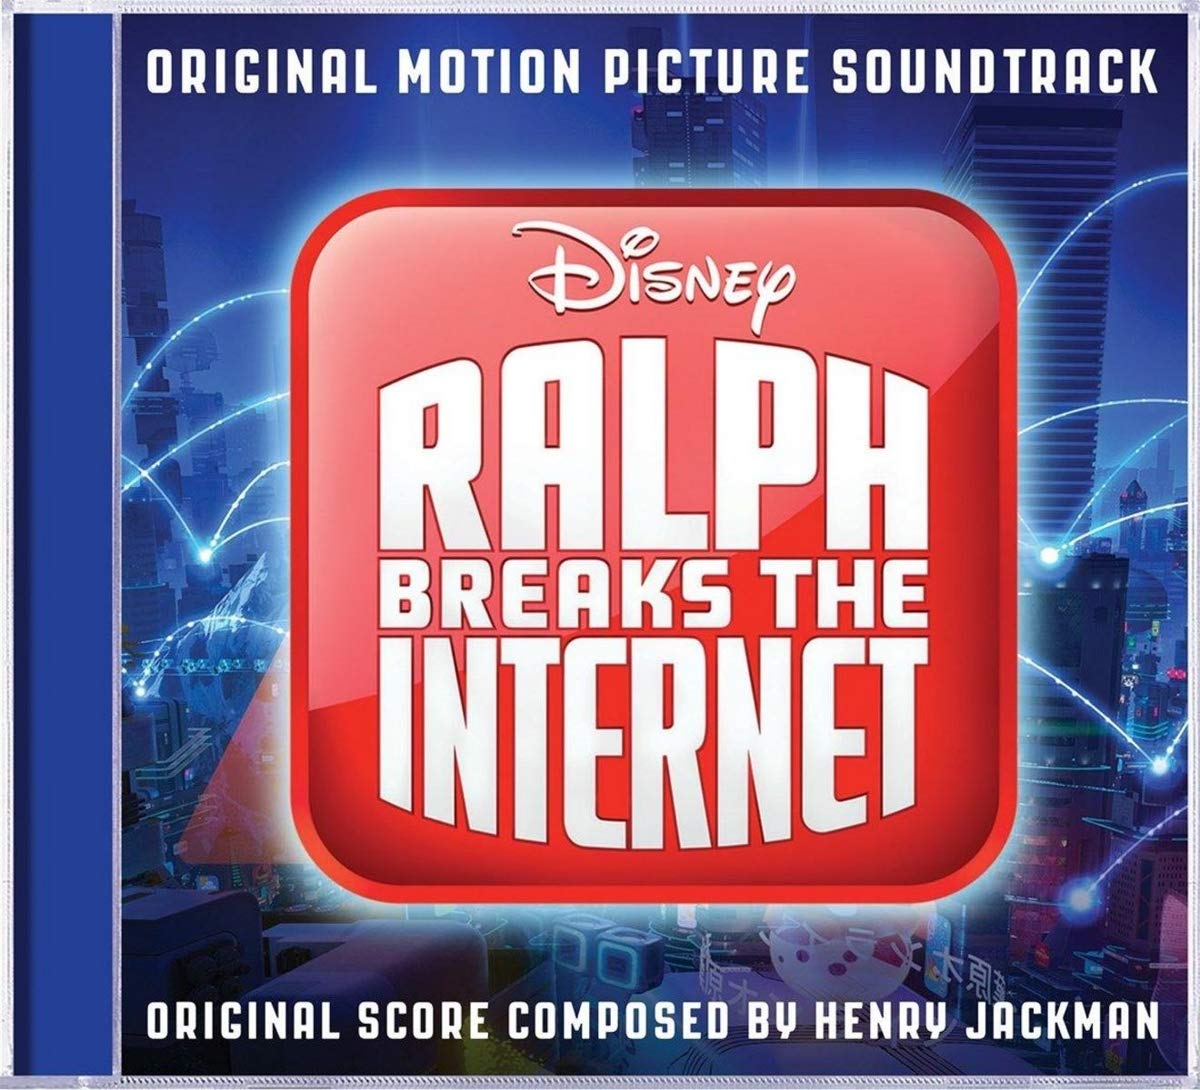 Ratatouille (soundtrack), Disney Wiki